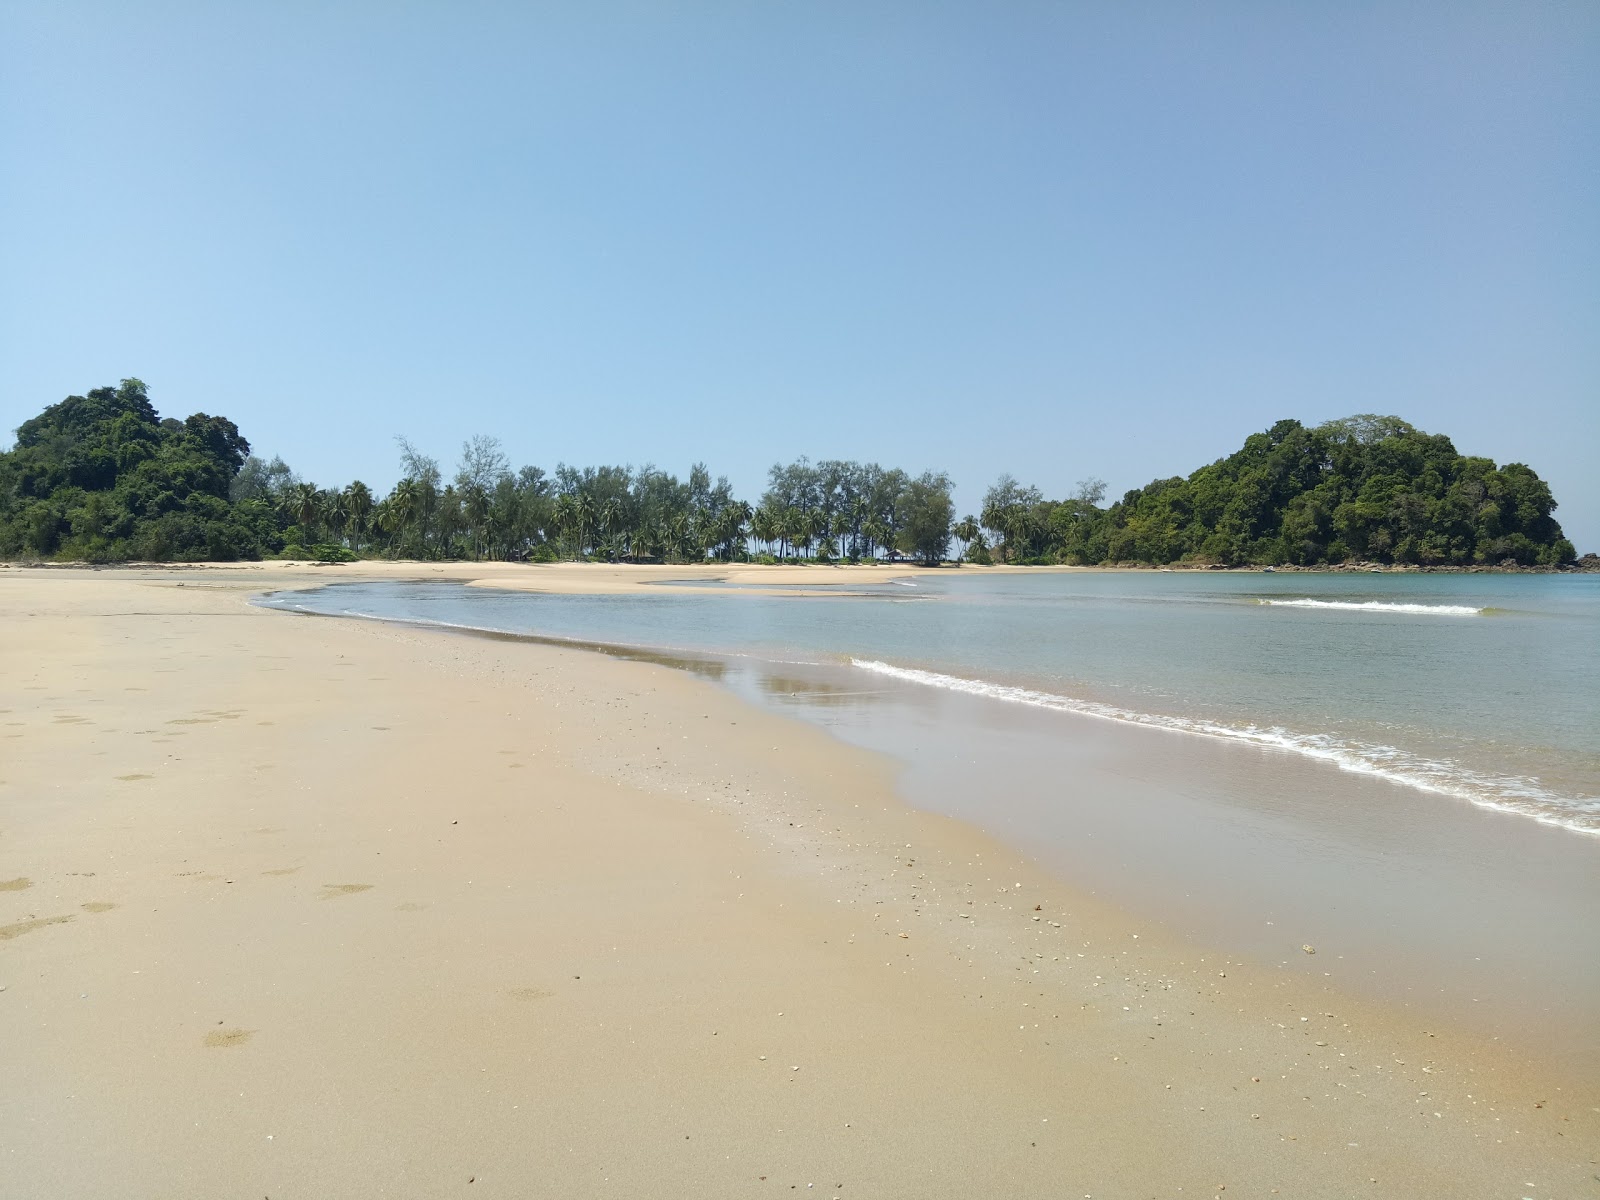 Foto de Phrathong Beach ubicado en área natural